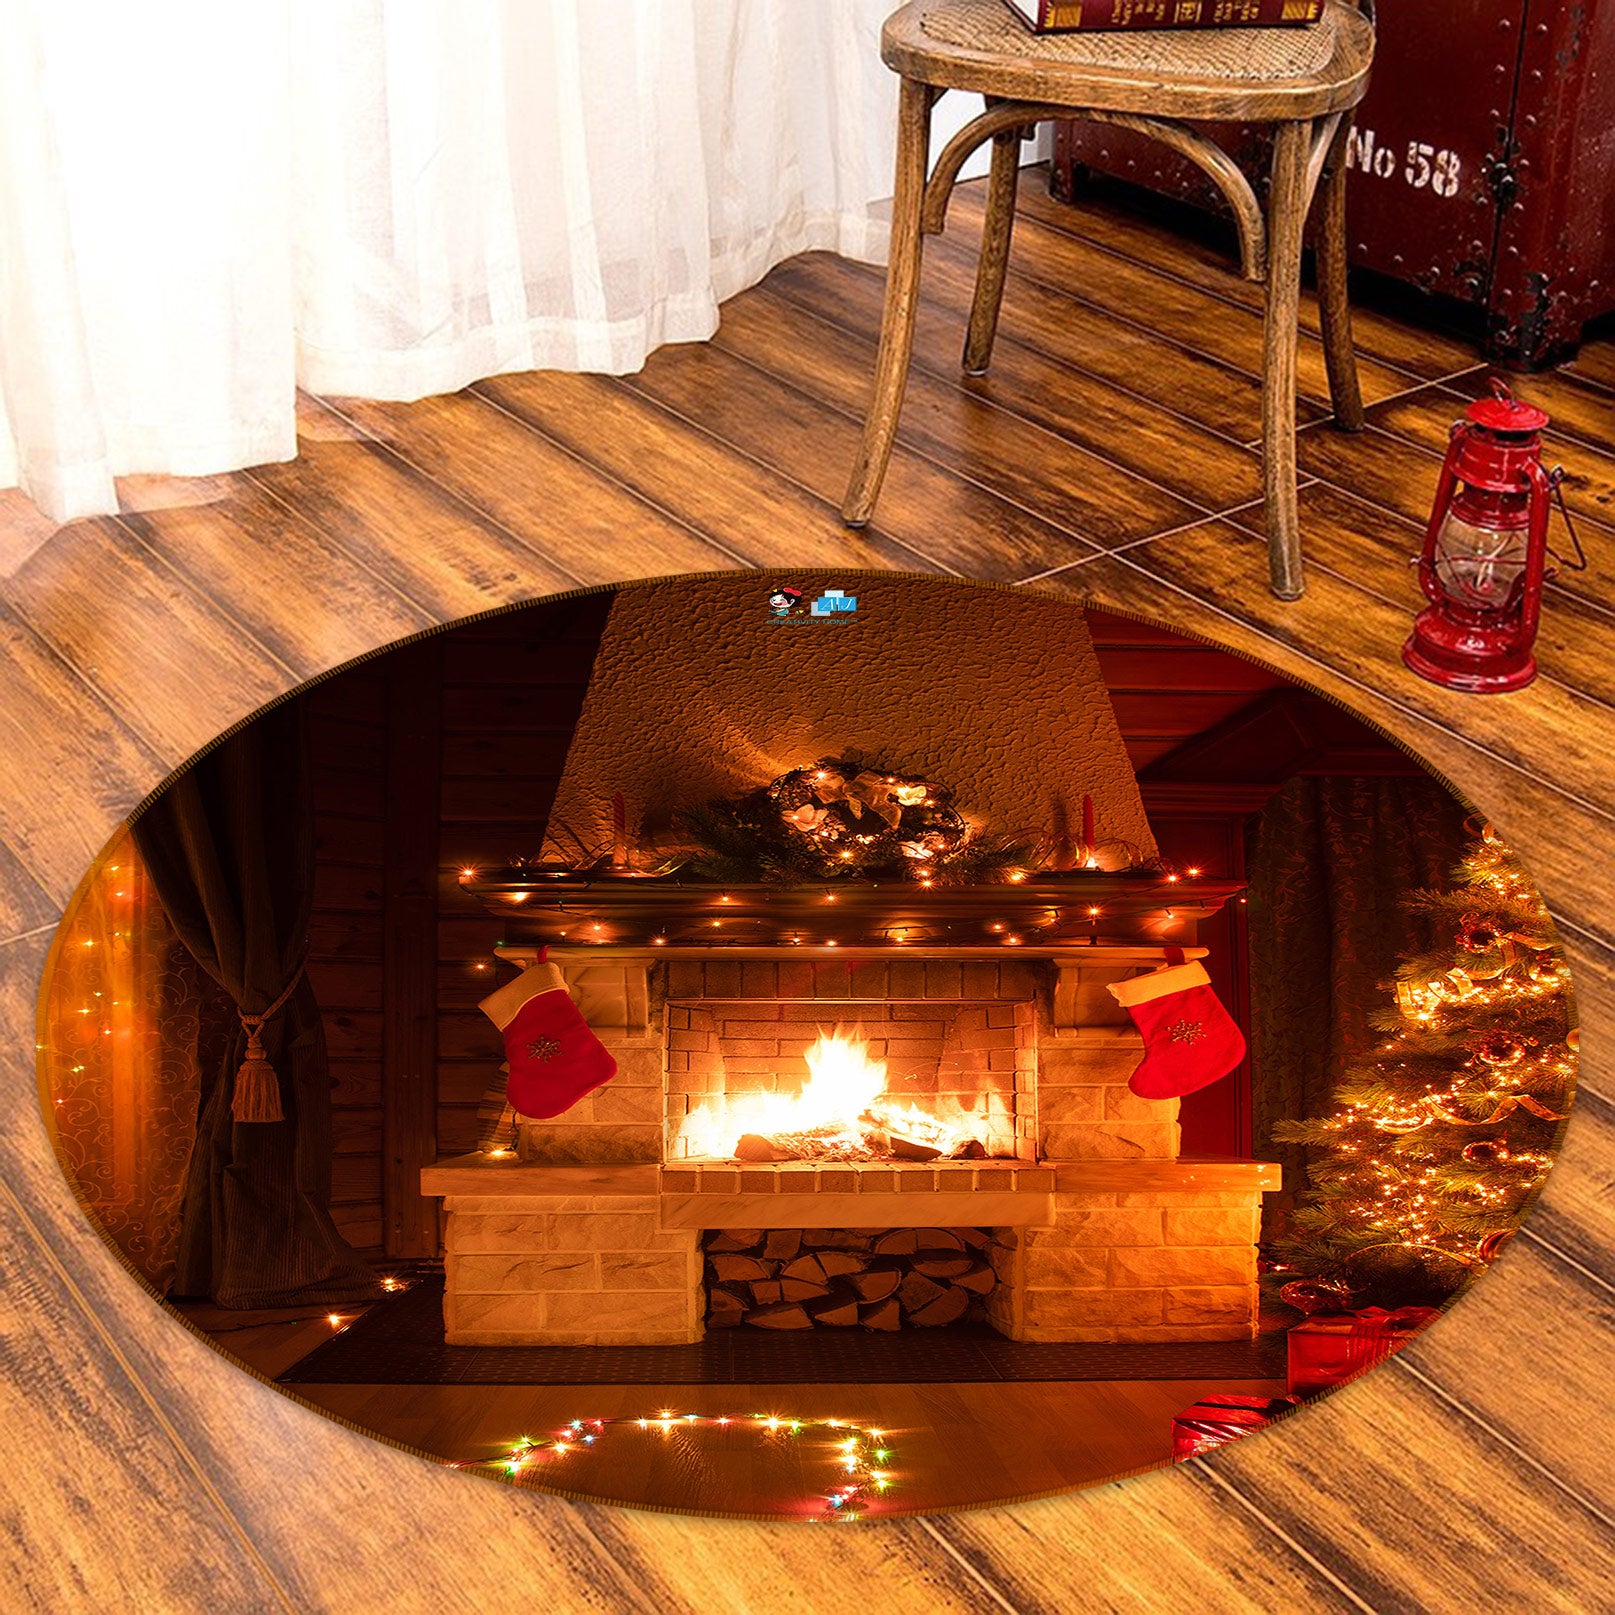 3D Fireplace 54088 Christmas Round Non Slip Rug Mat Xmas